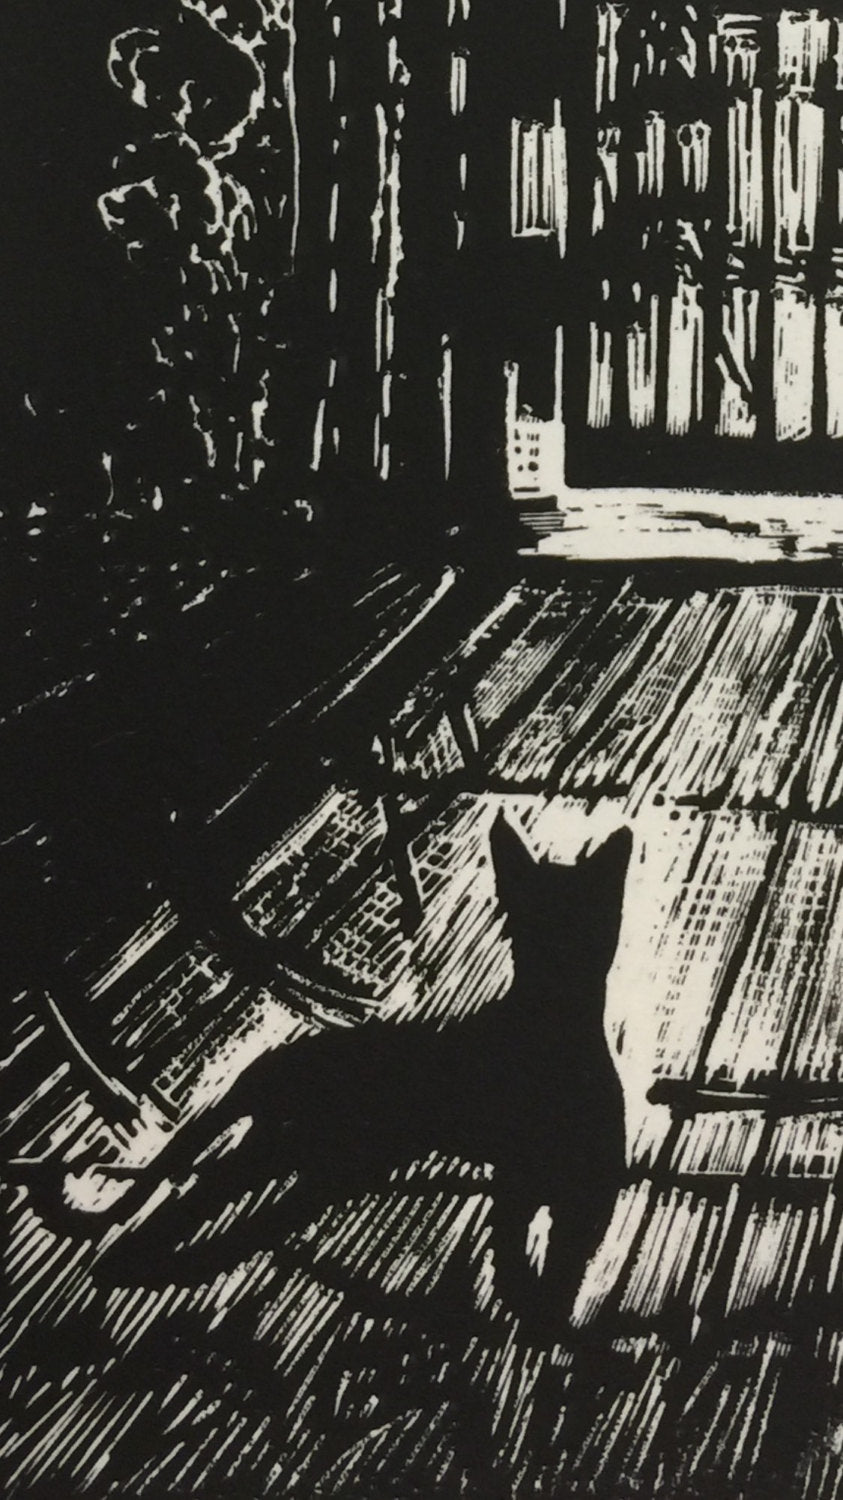 Cat Under Lampost Light Original Print Wood Engraving Woodcut Still of the Night